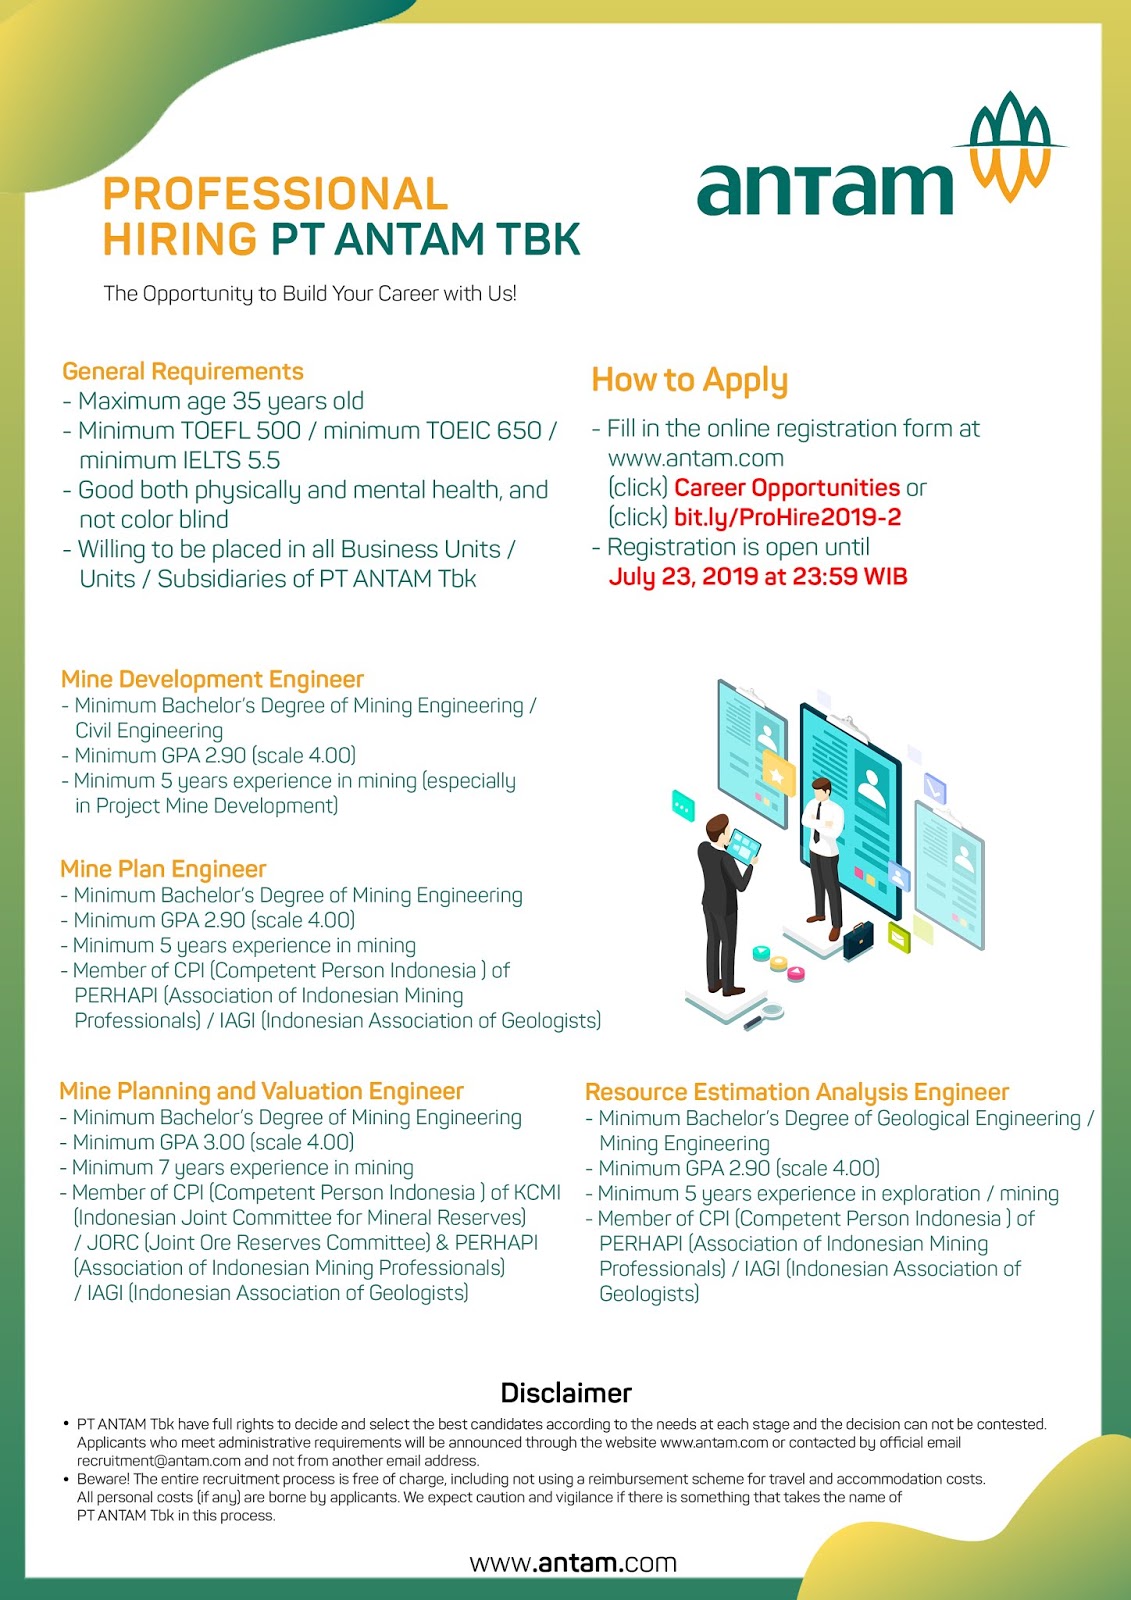 Lowongan Kerja BUMN PT ANTAM (Persero) Tbk Deadline 23 Juli 2019